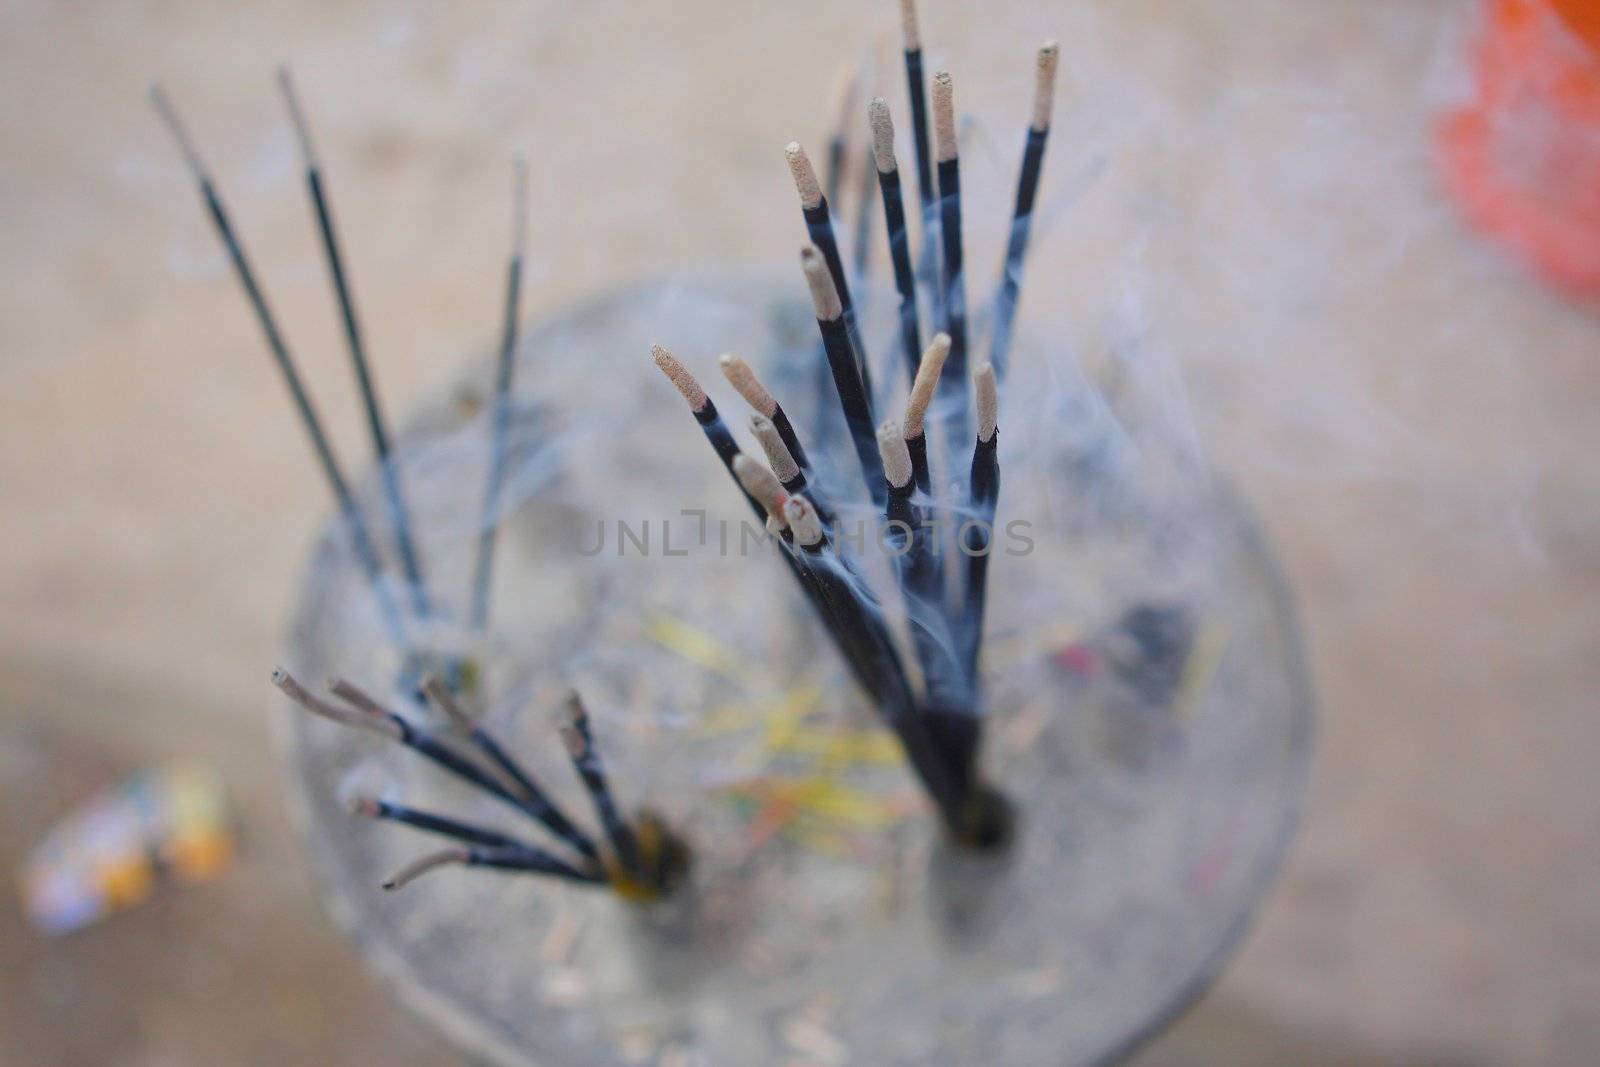 Indian incense sticks are burning